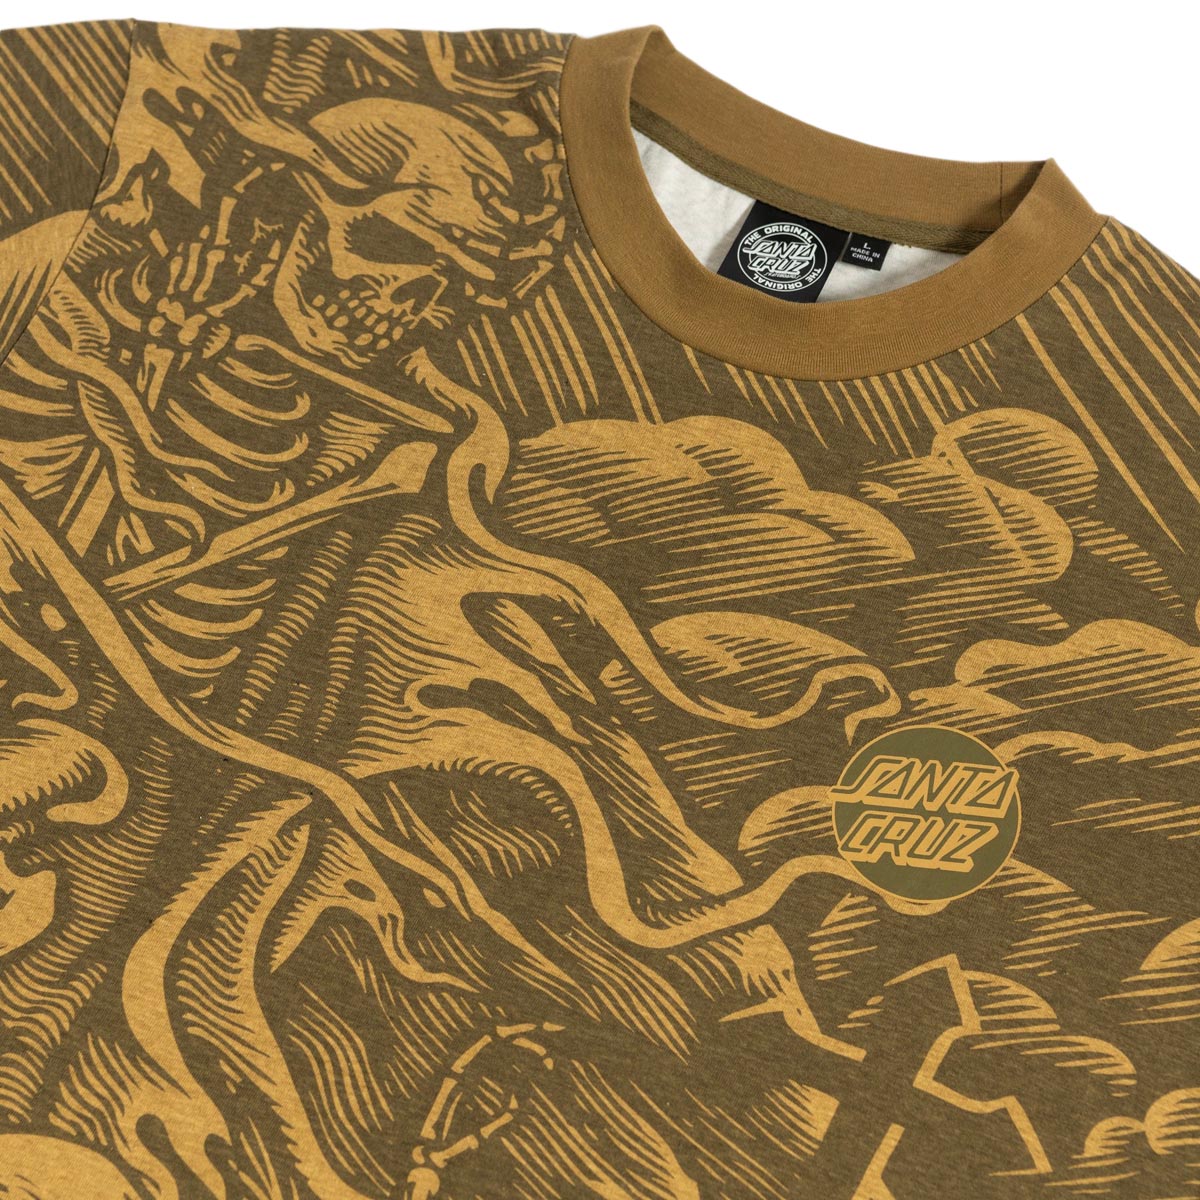 Santa Cruz OBrien Purgatory T-Shirt - Brass image 3